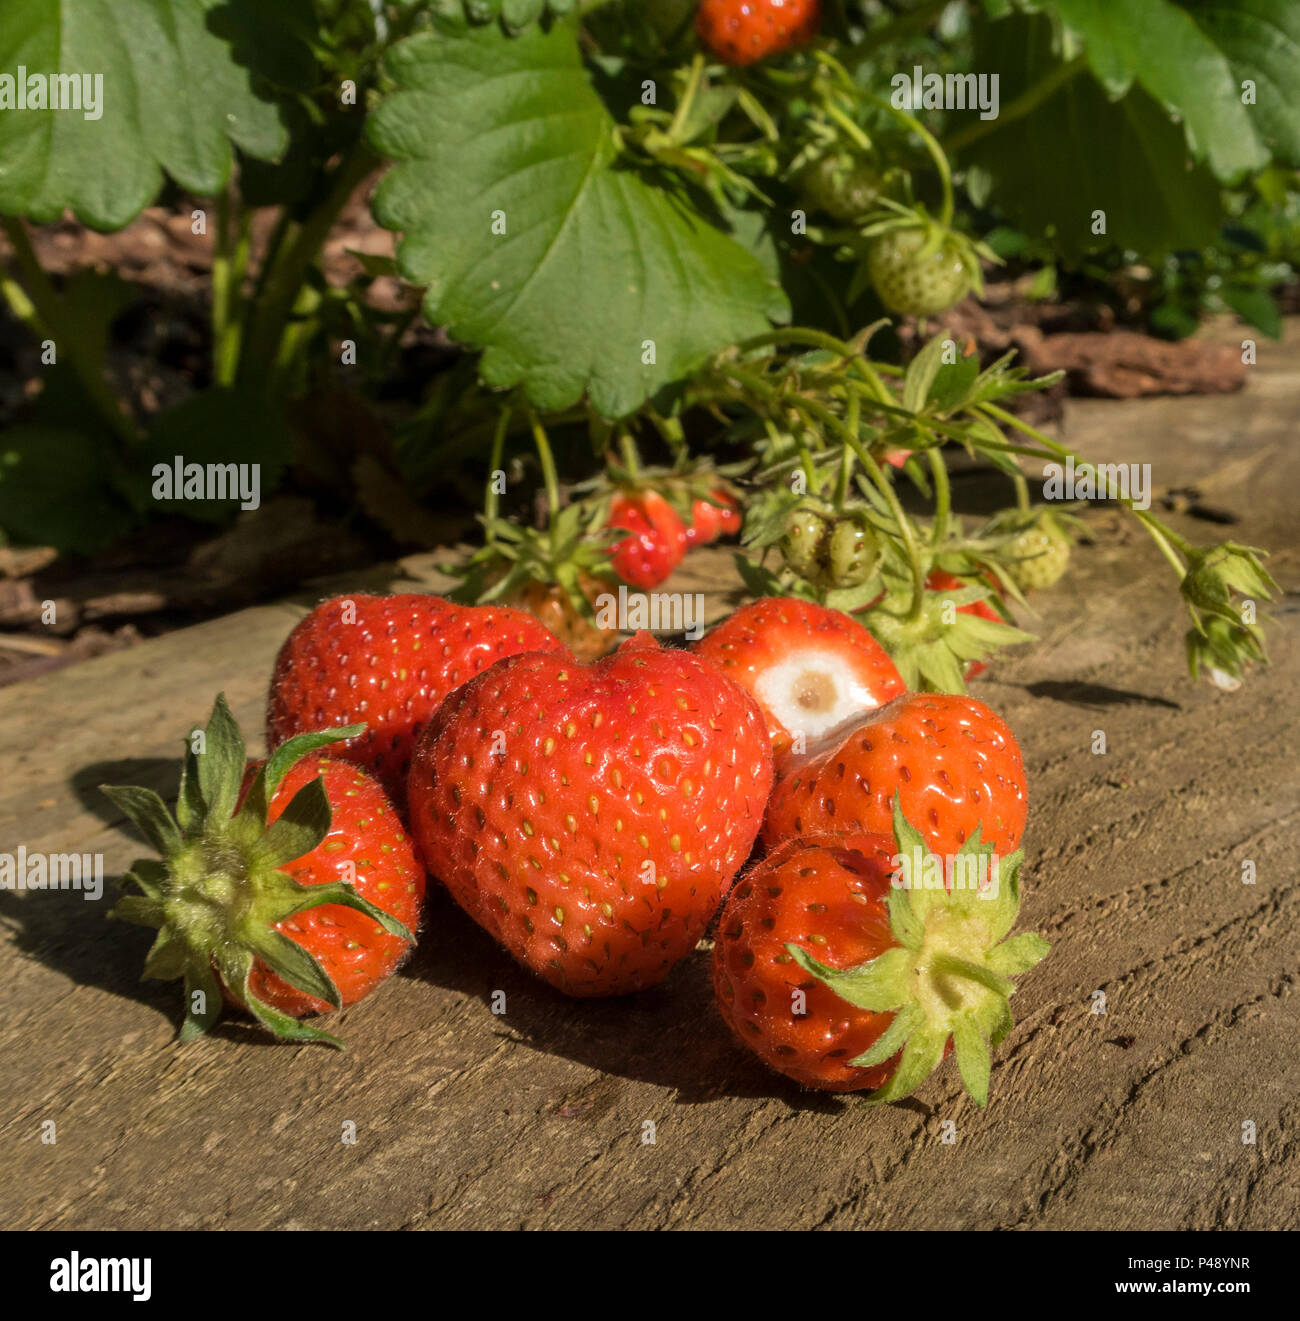 Strawberry Cambridge Favourite, fragaria x ananassa, strawberries growing on the plant Stock Photo